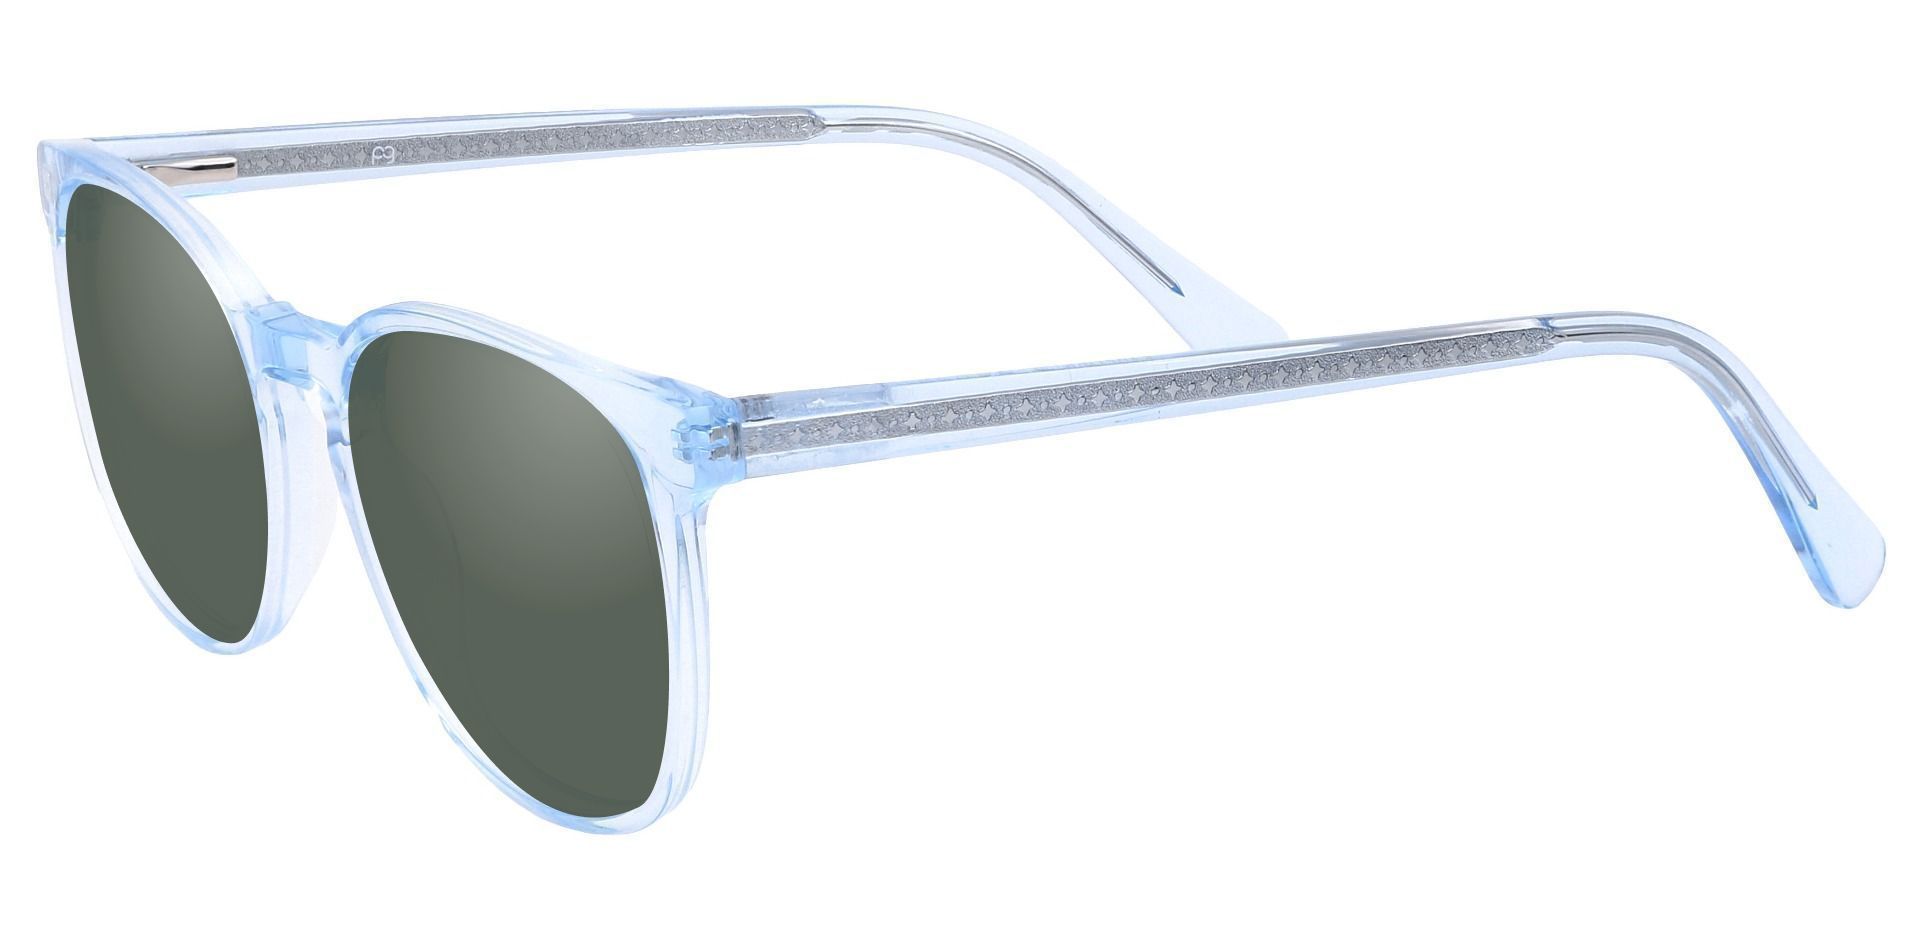 Nebula Round Prescription Sunglasses - Blue Frame With Green Lenses